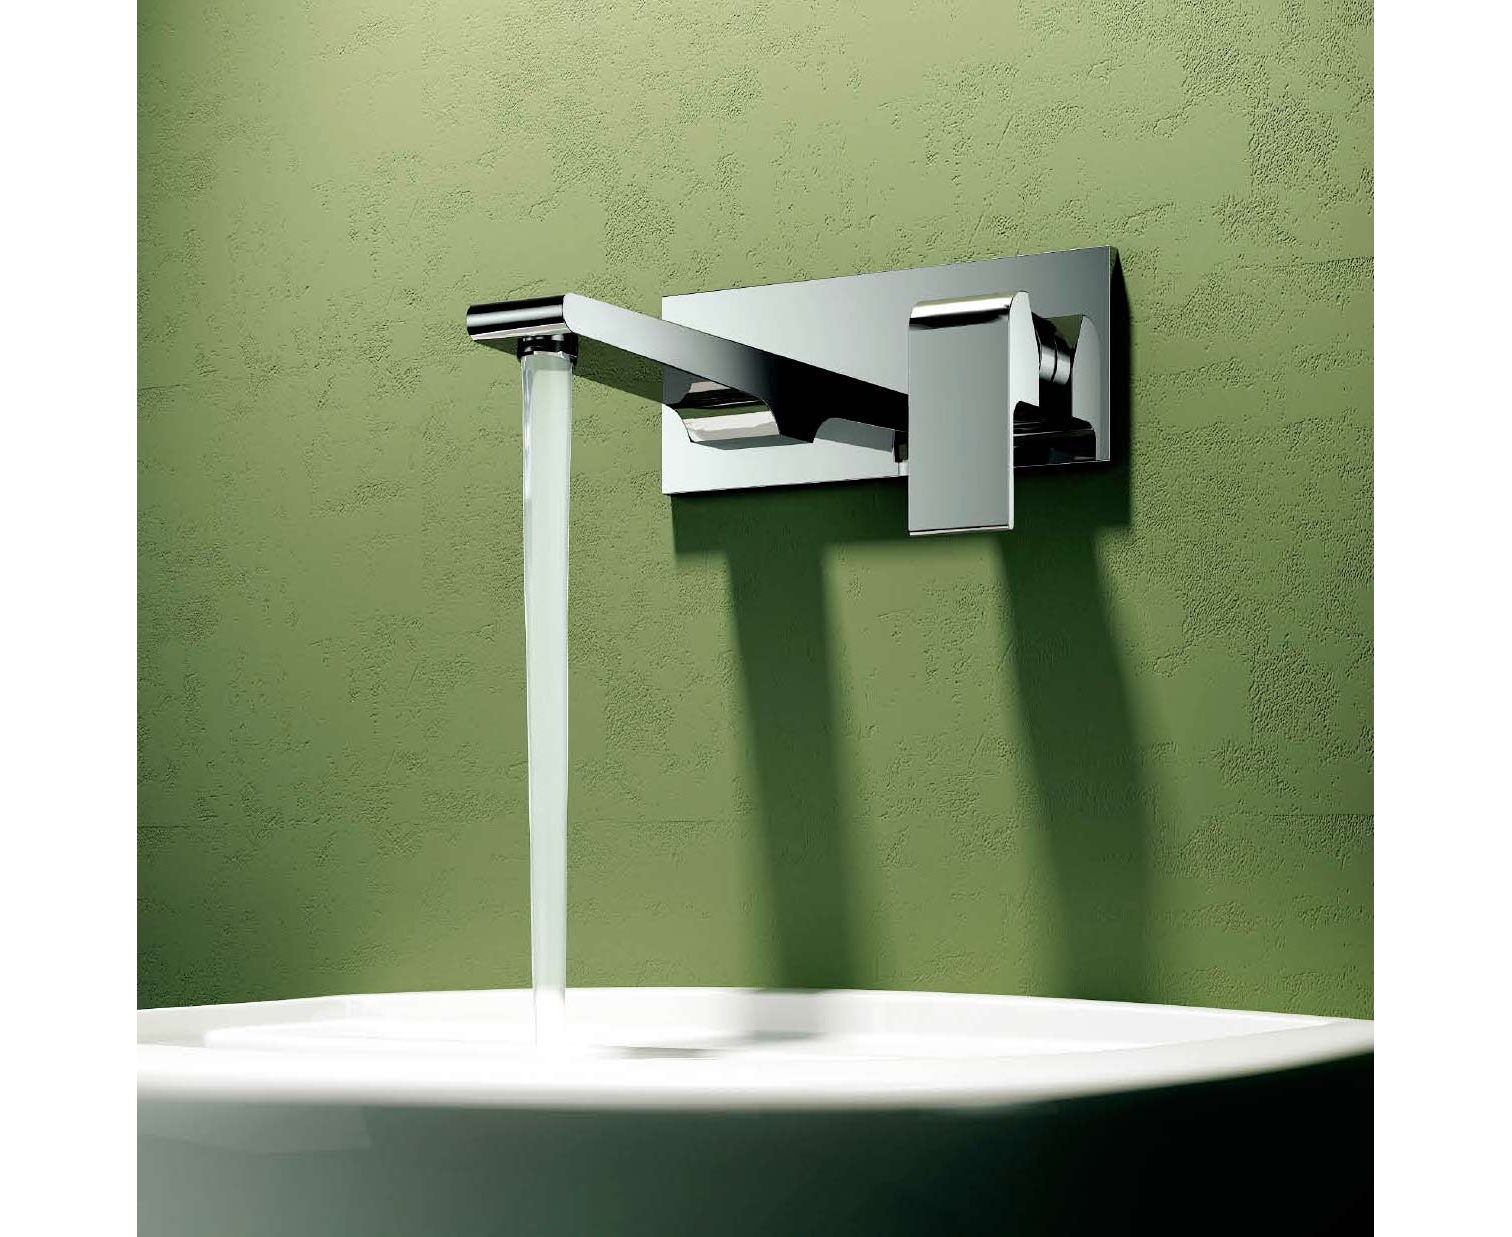 wafare 8 wall mount bathroom sink faucet